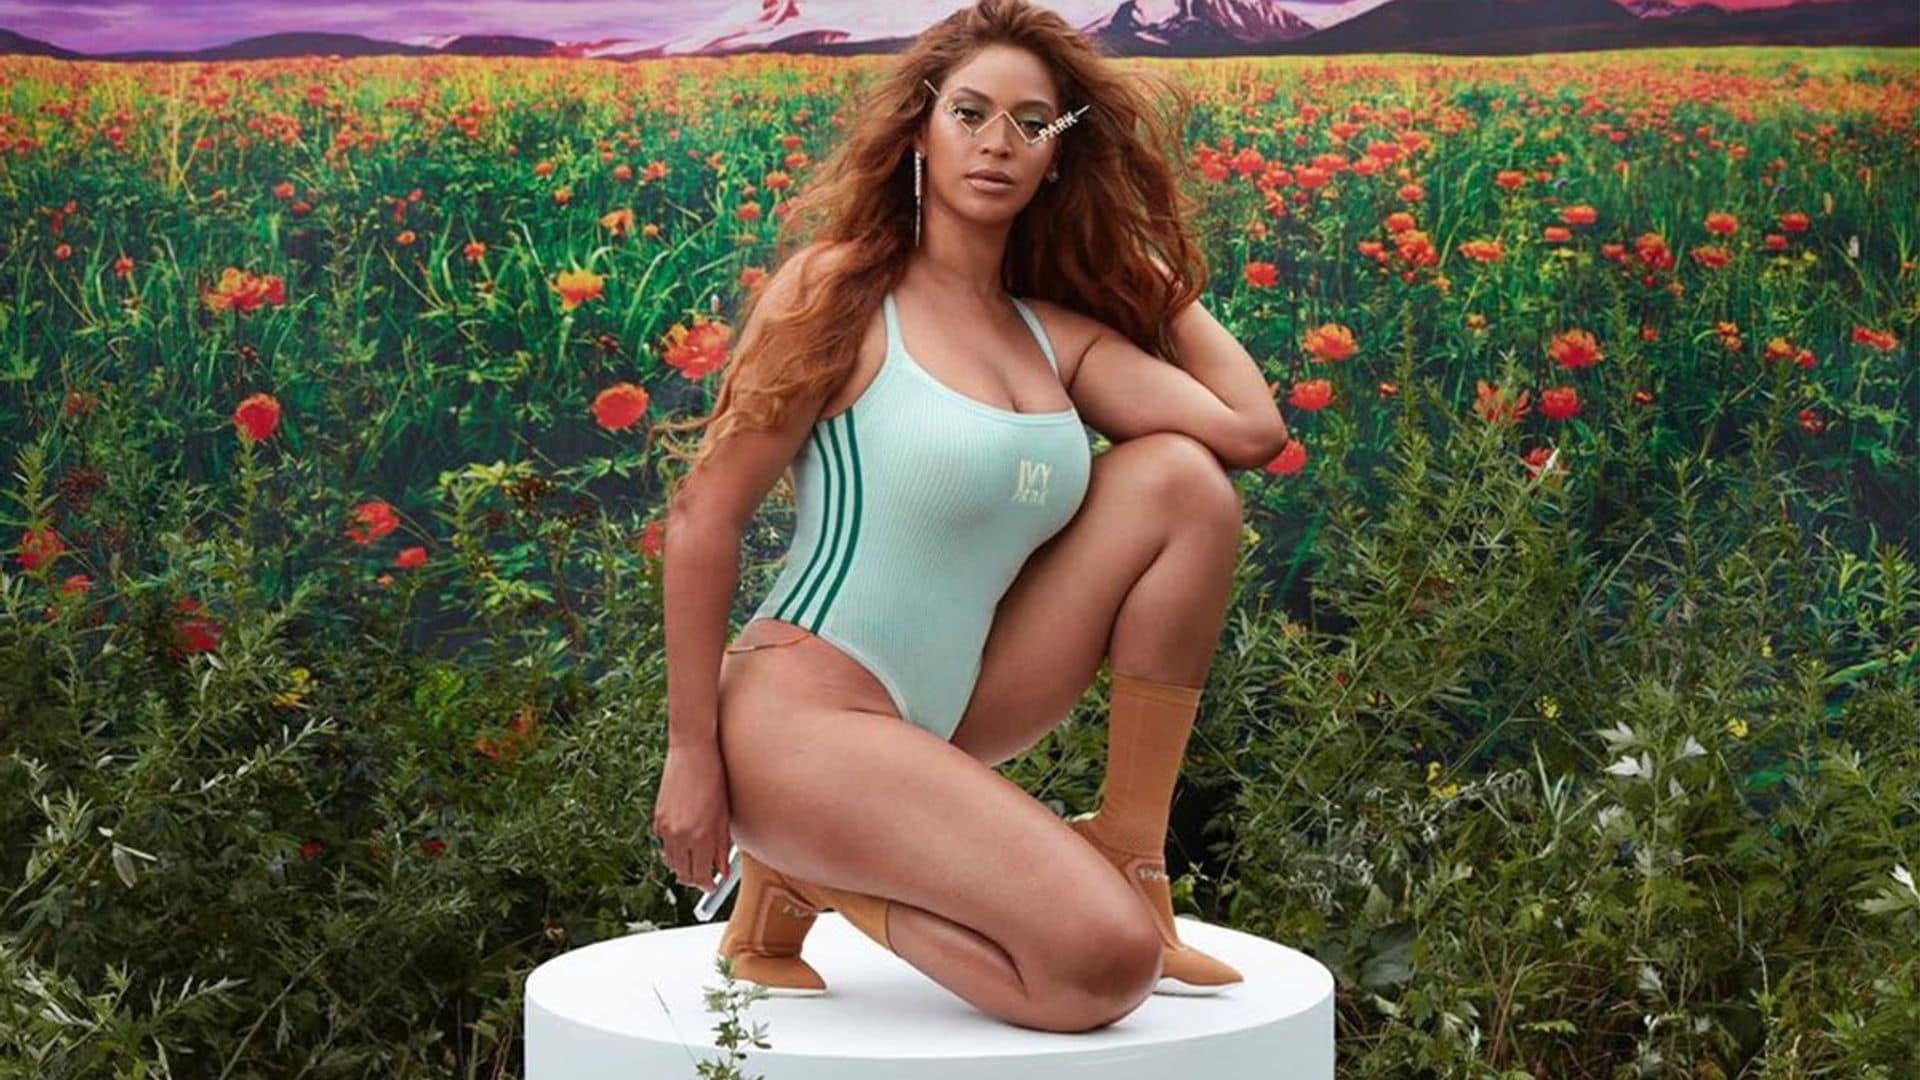 Beyonce wearing Adidas x Ivy Park.